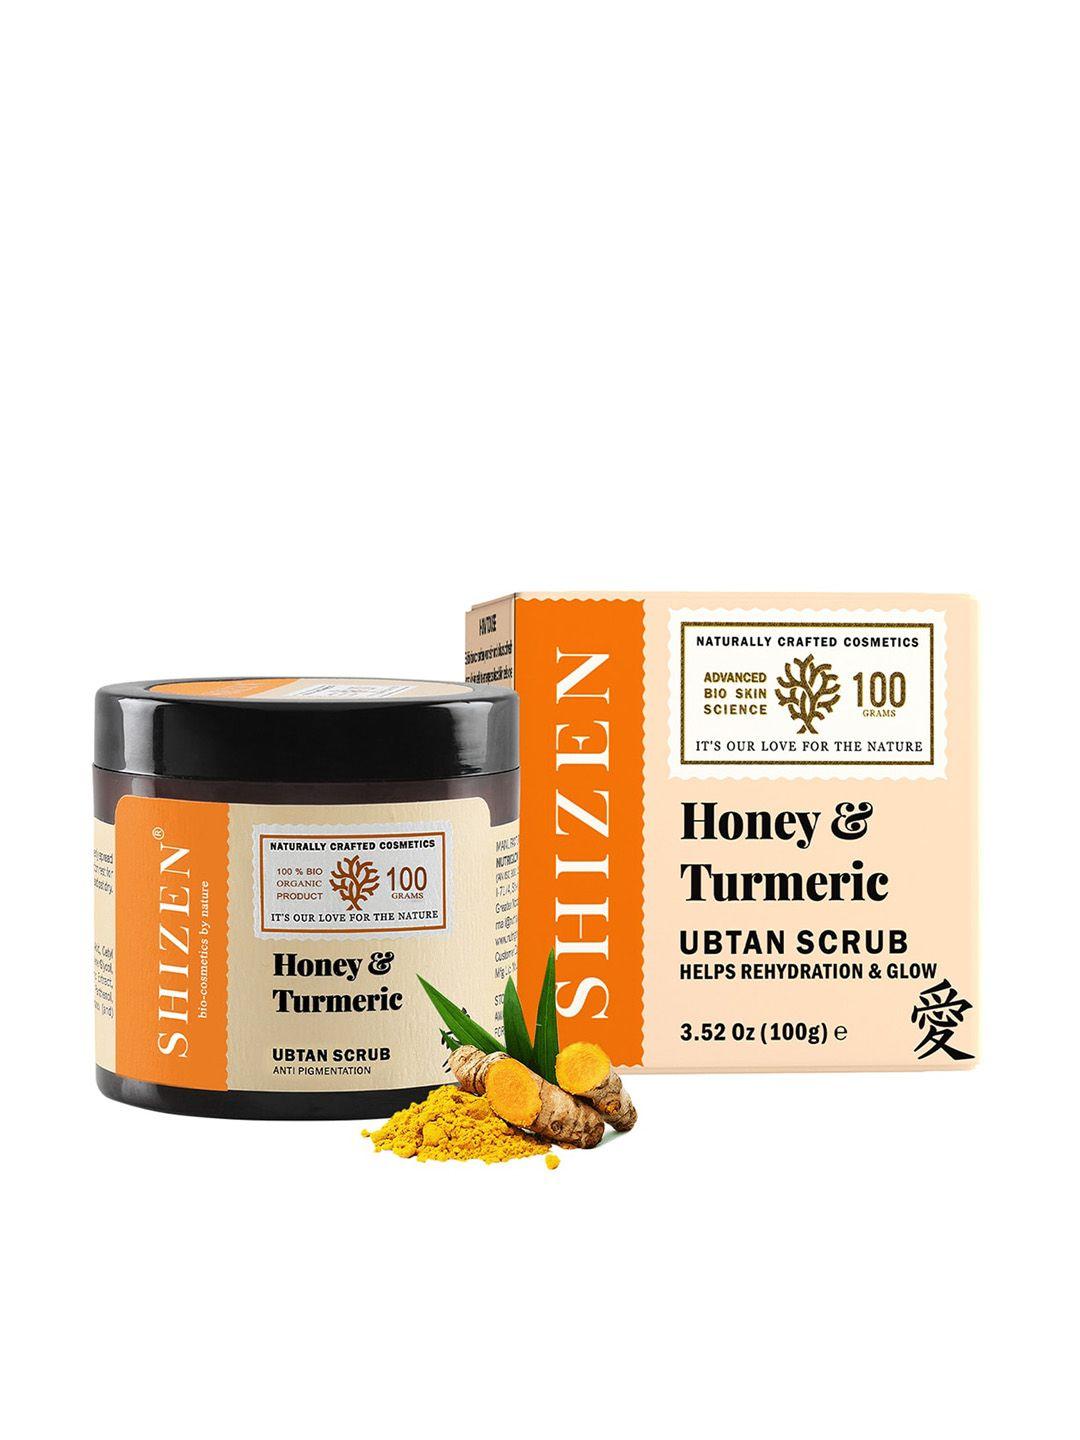 shizen honey & turmeric ubtan scrub for anti-pigmentation - 100 g